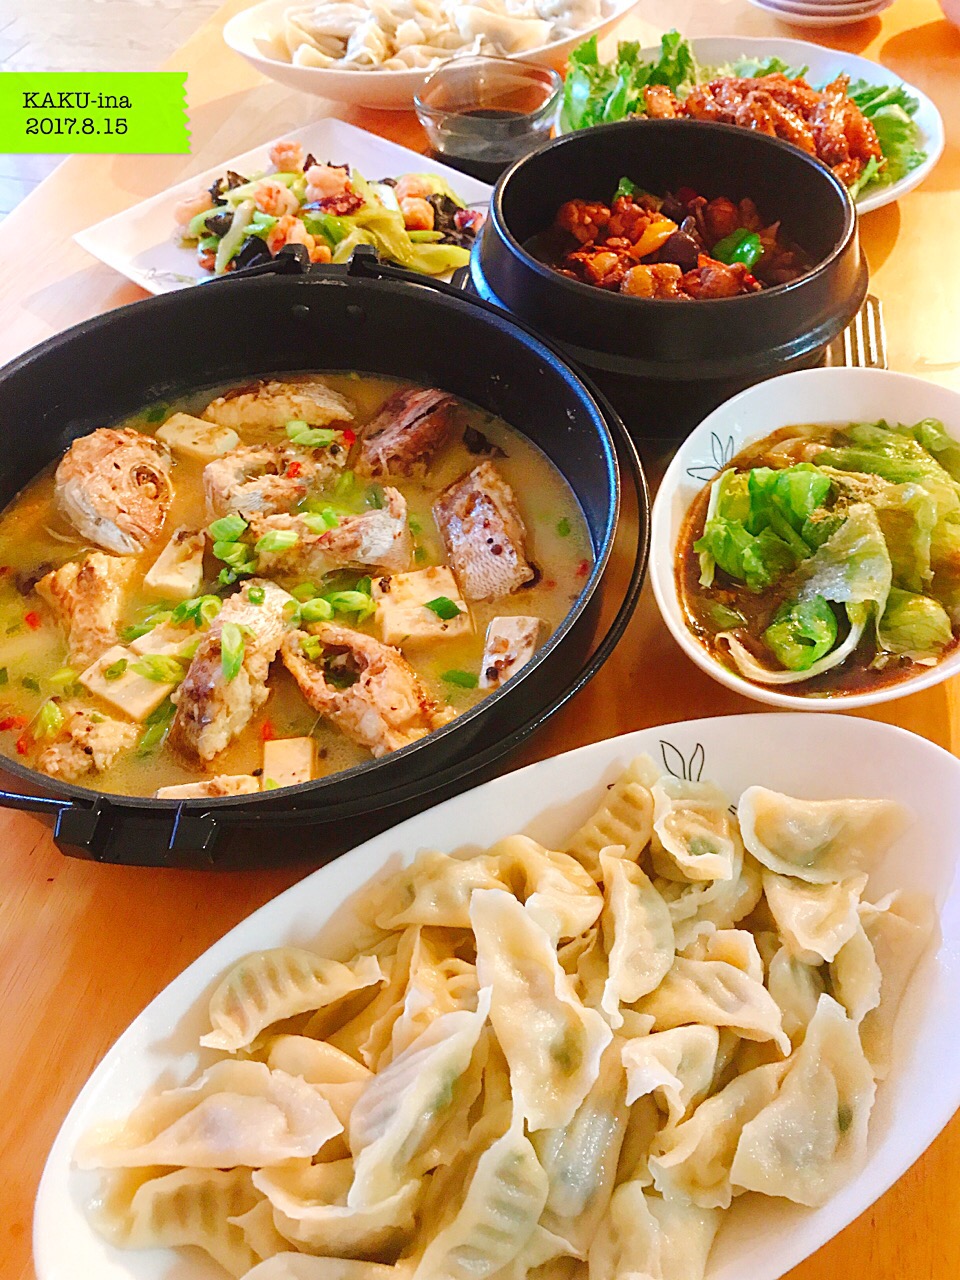 ❤️本番の中華料理☘️☘️☘️
大満足???✨